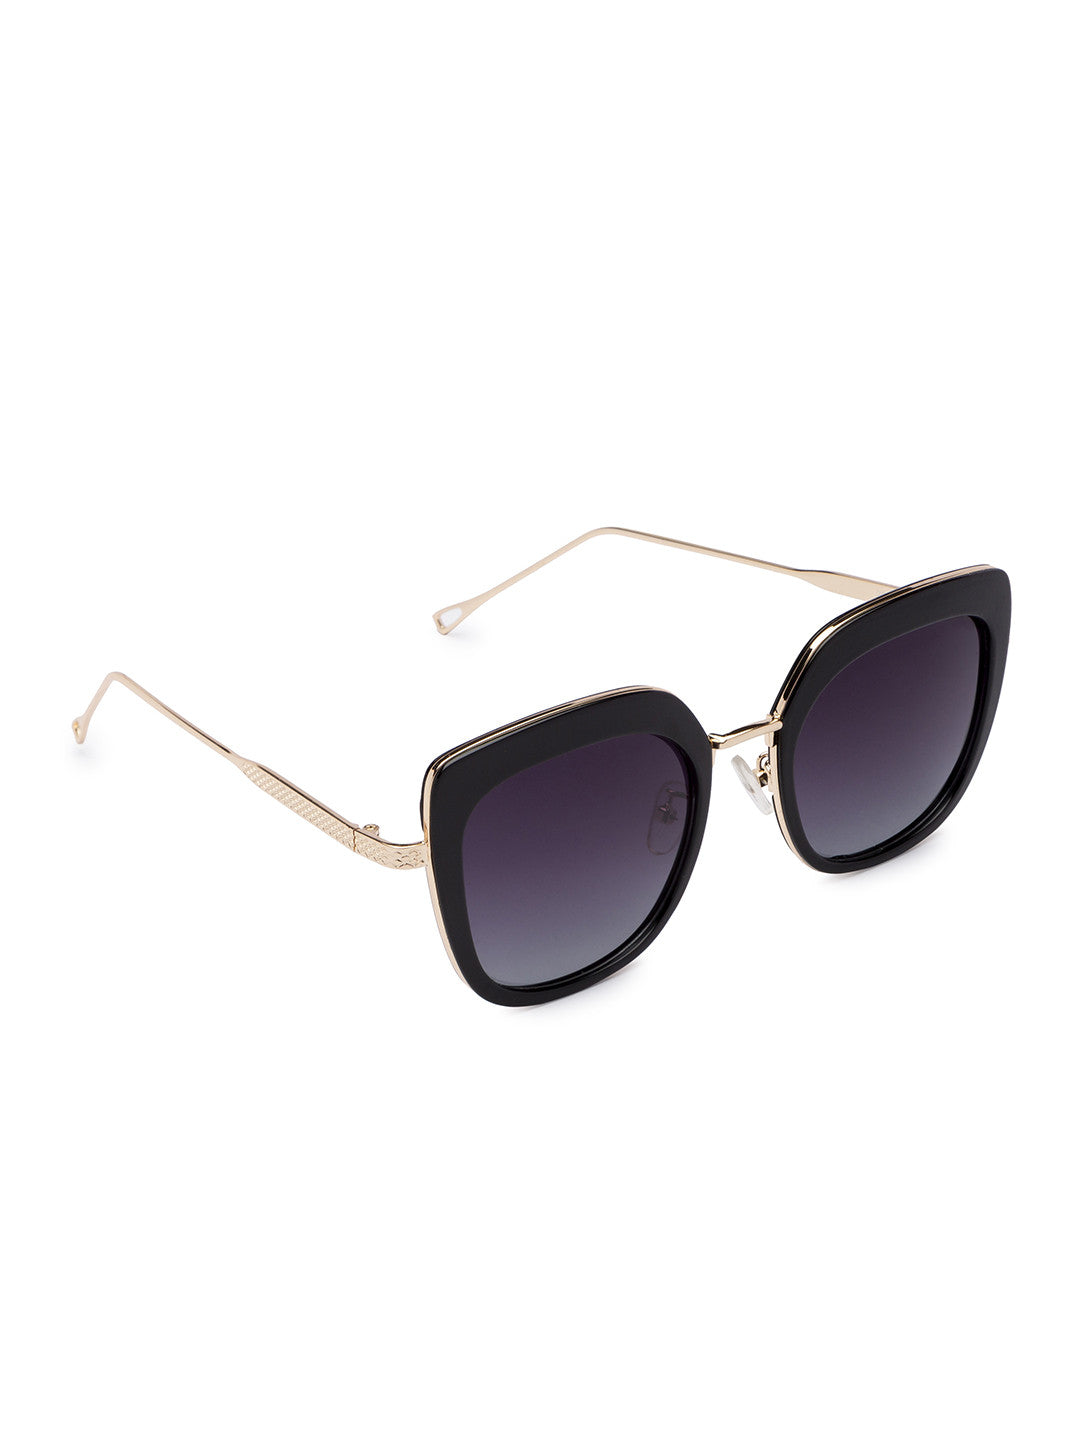 Black Full Rim Wayfarer Sunglasses-2